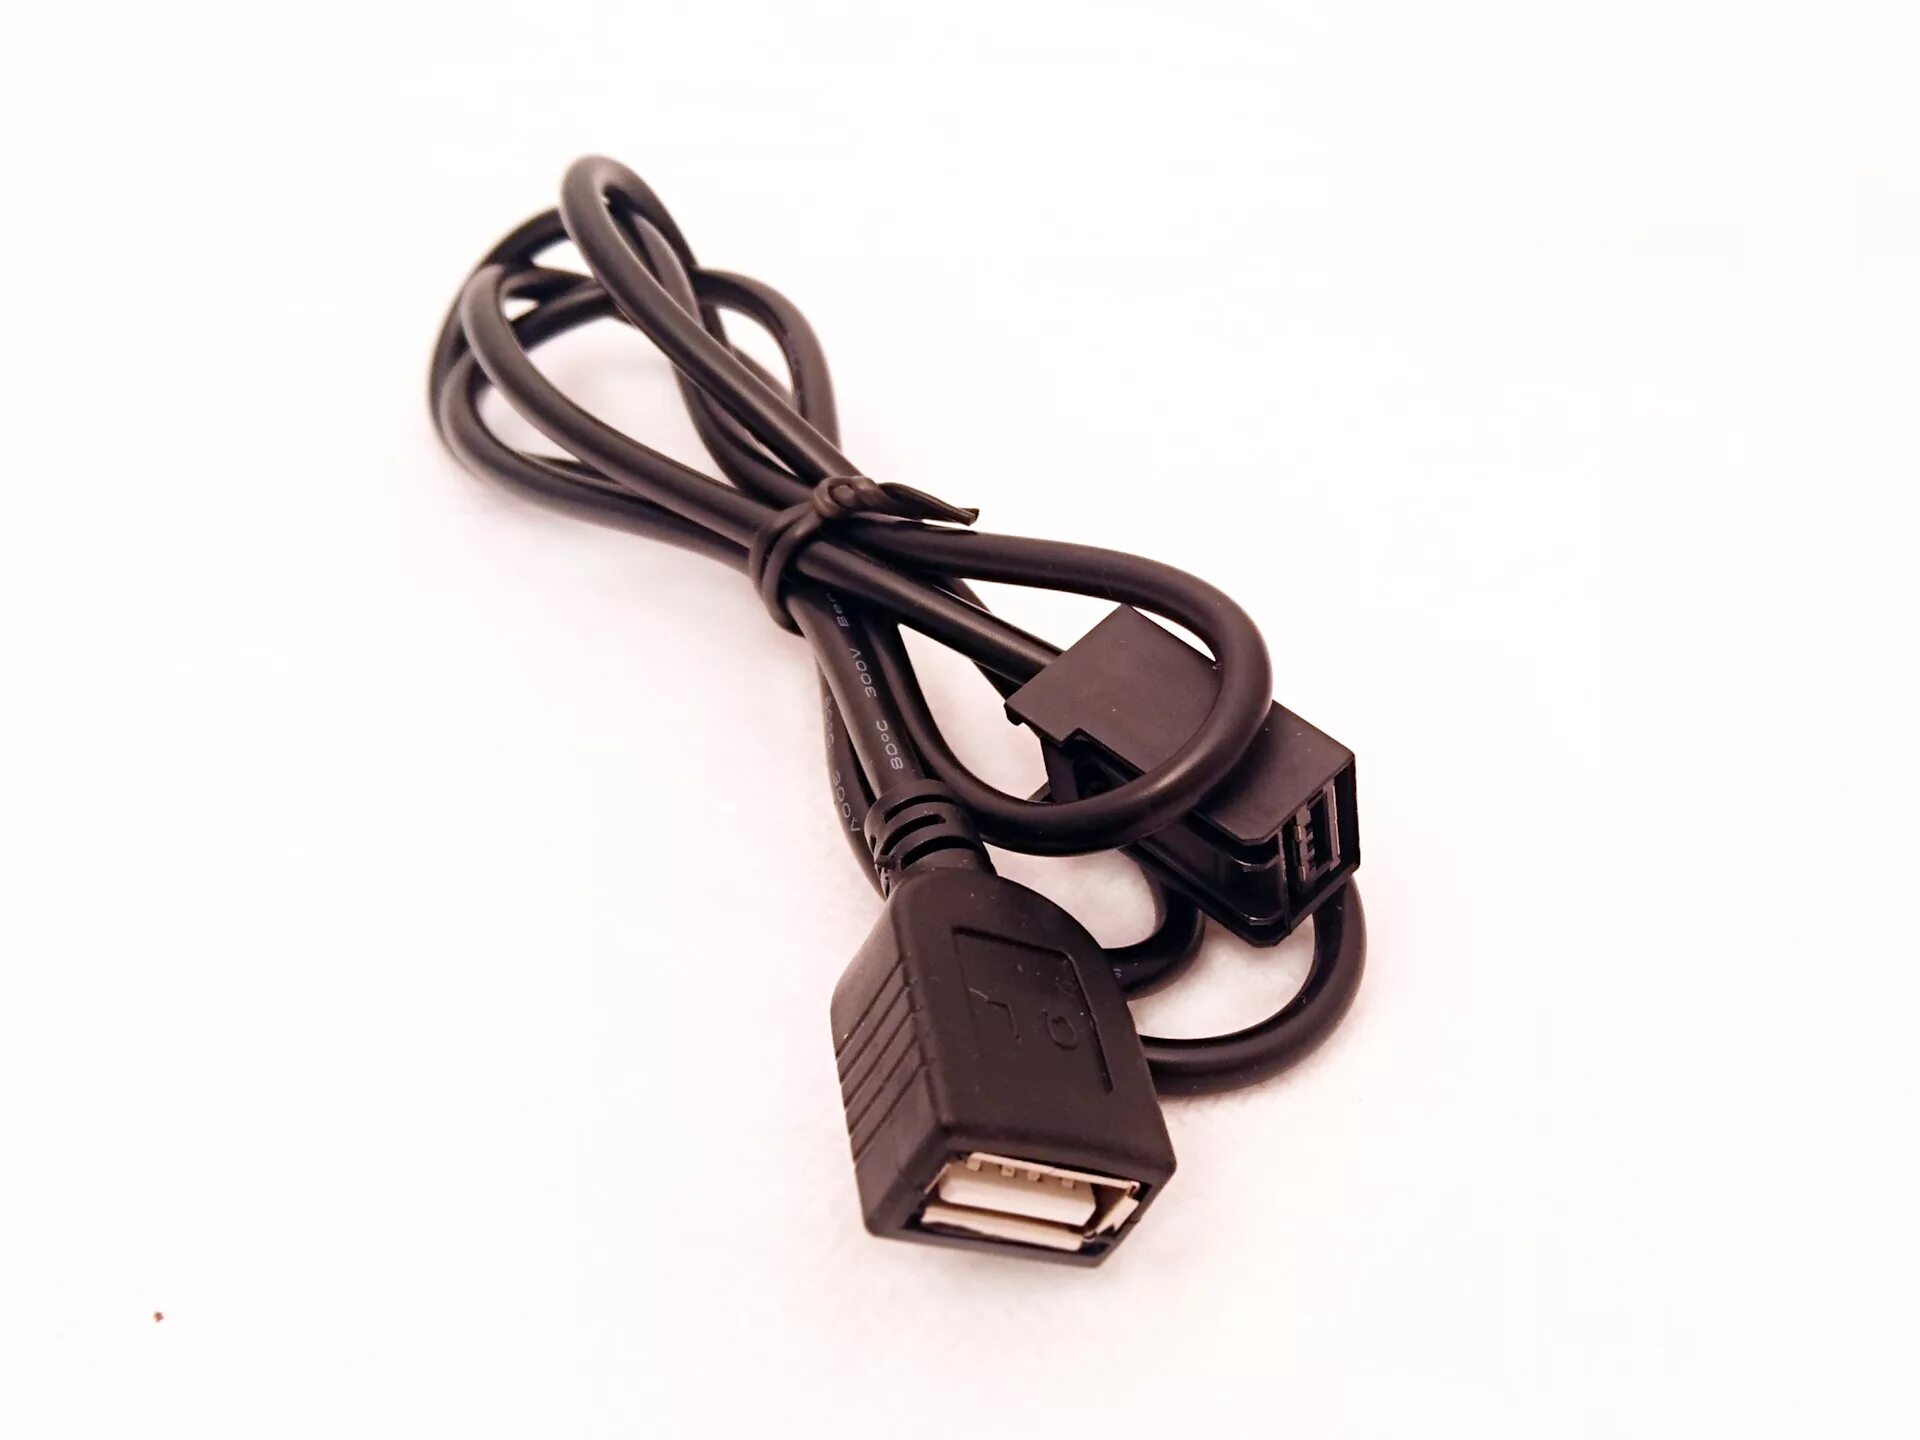 Honda кабель. Honda Civic 4d USB кабель. Юсб провод Хонда Цивик. USB aux Adapter Civic 4d. USB для магнитолы Хонда Цивик 4д.